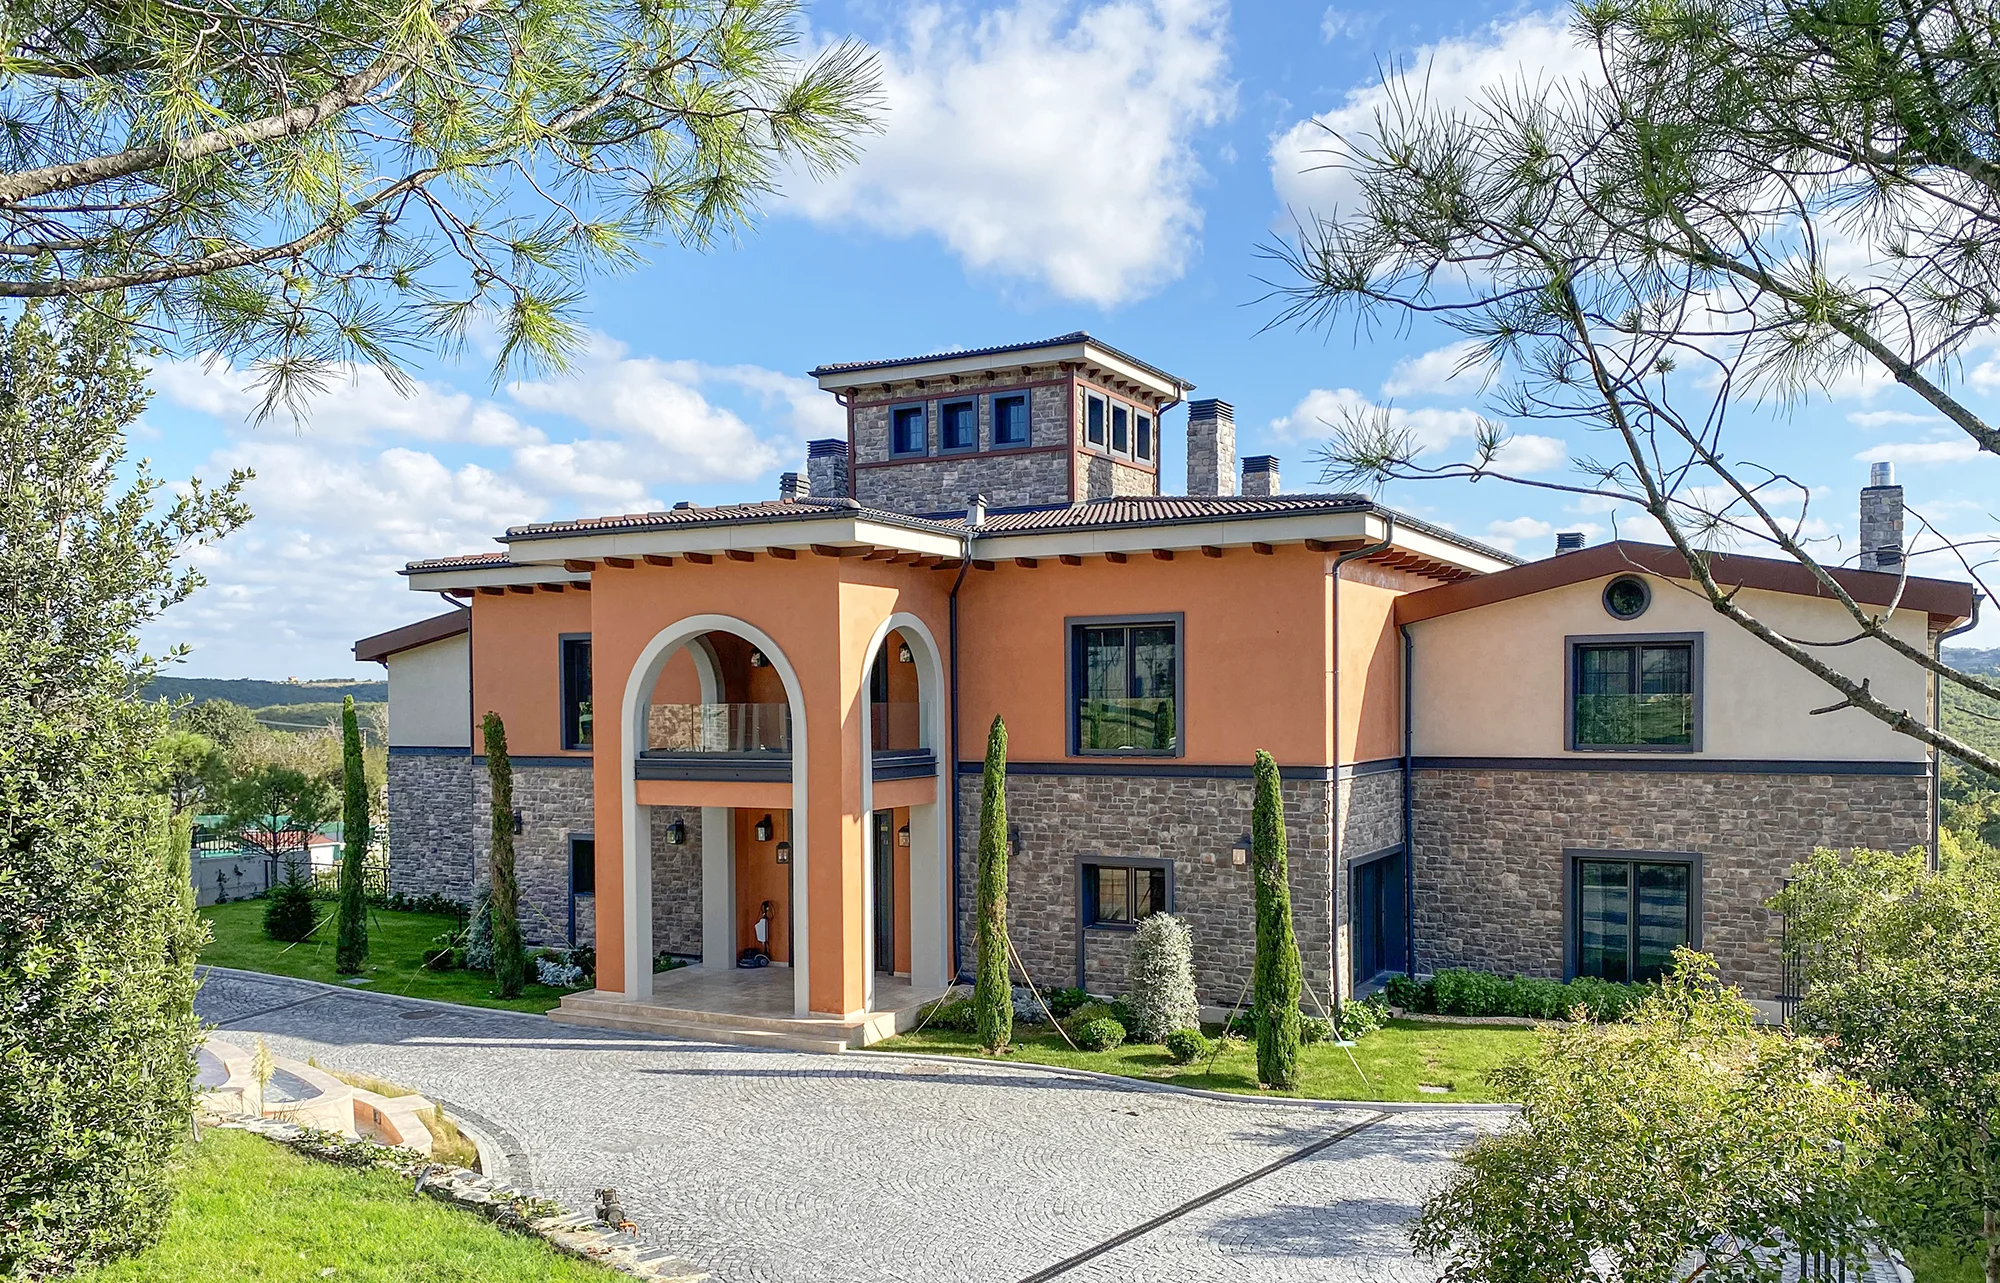 Italian villa with stone walls